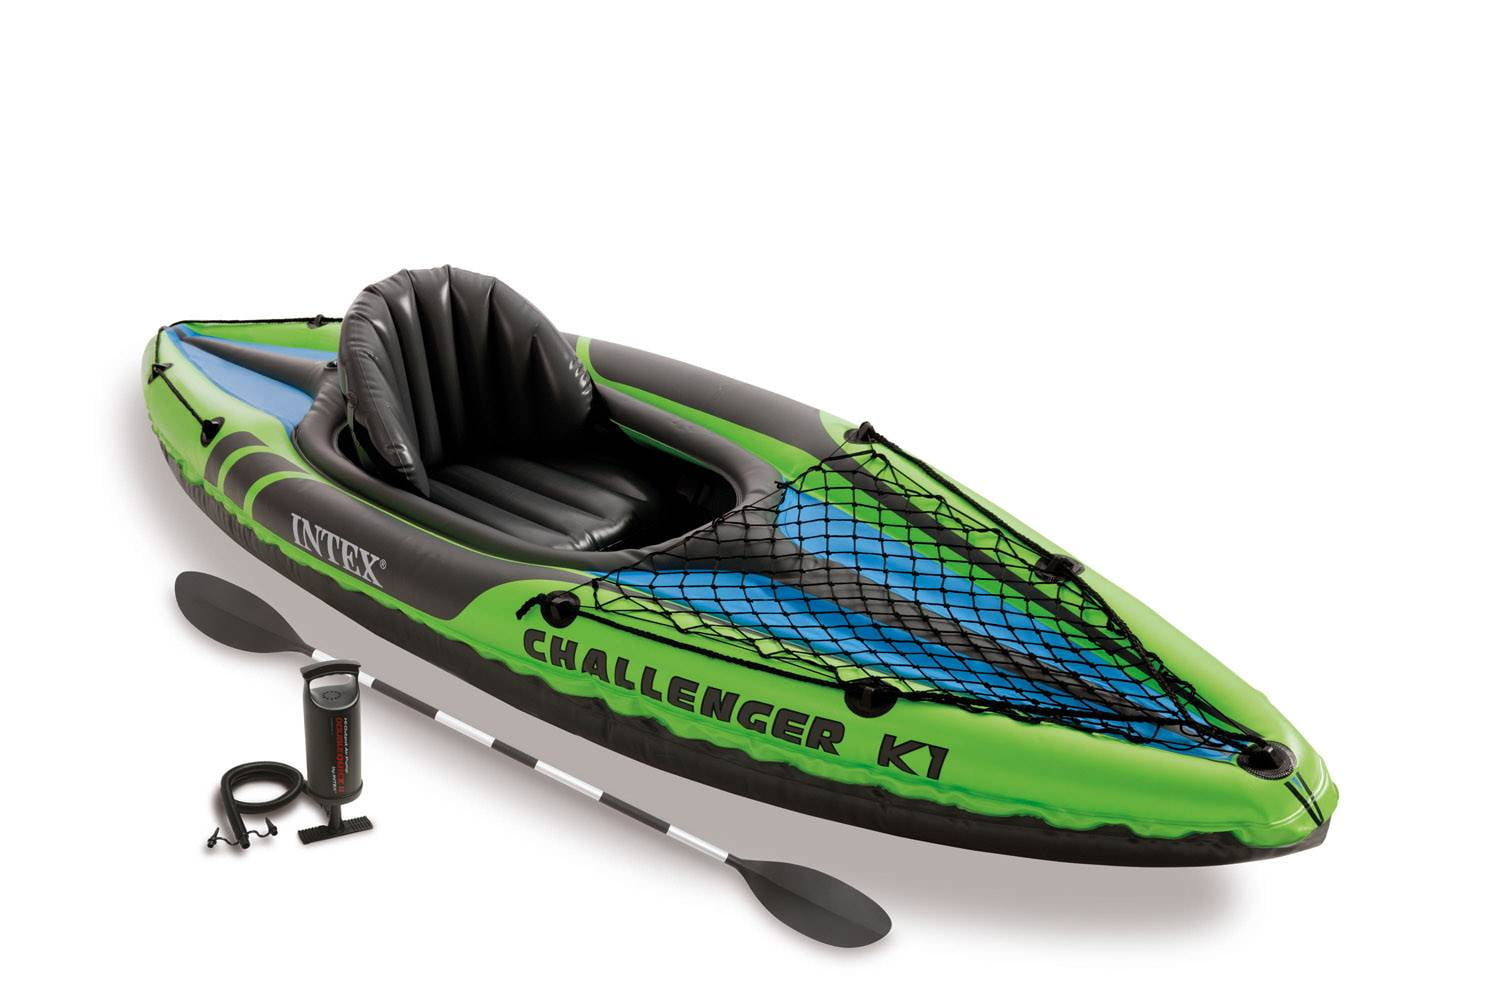 Intex Challenger K1 1-Person Inflatable Sporty Kayak + And Pump | 68305EP - Walmart.com